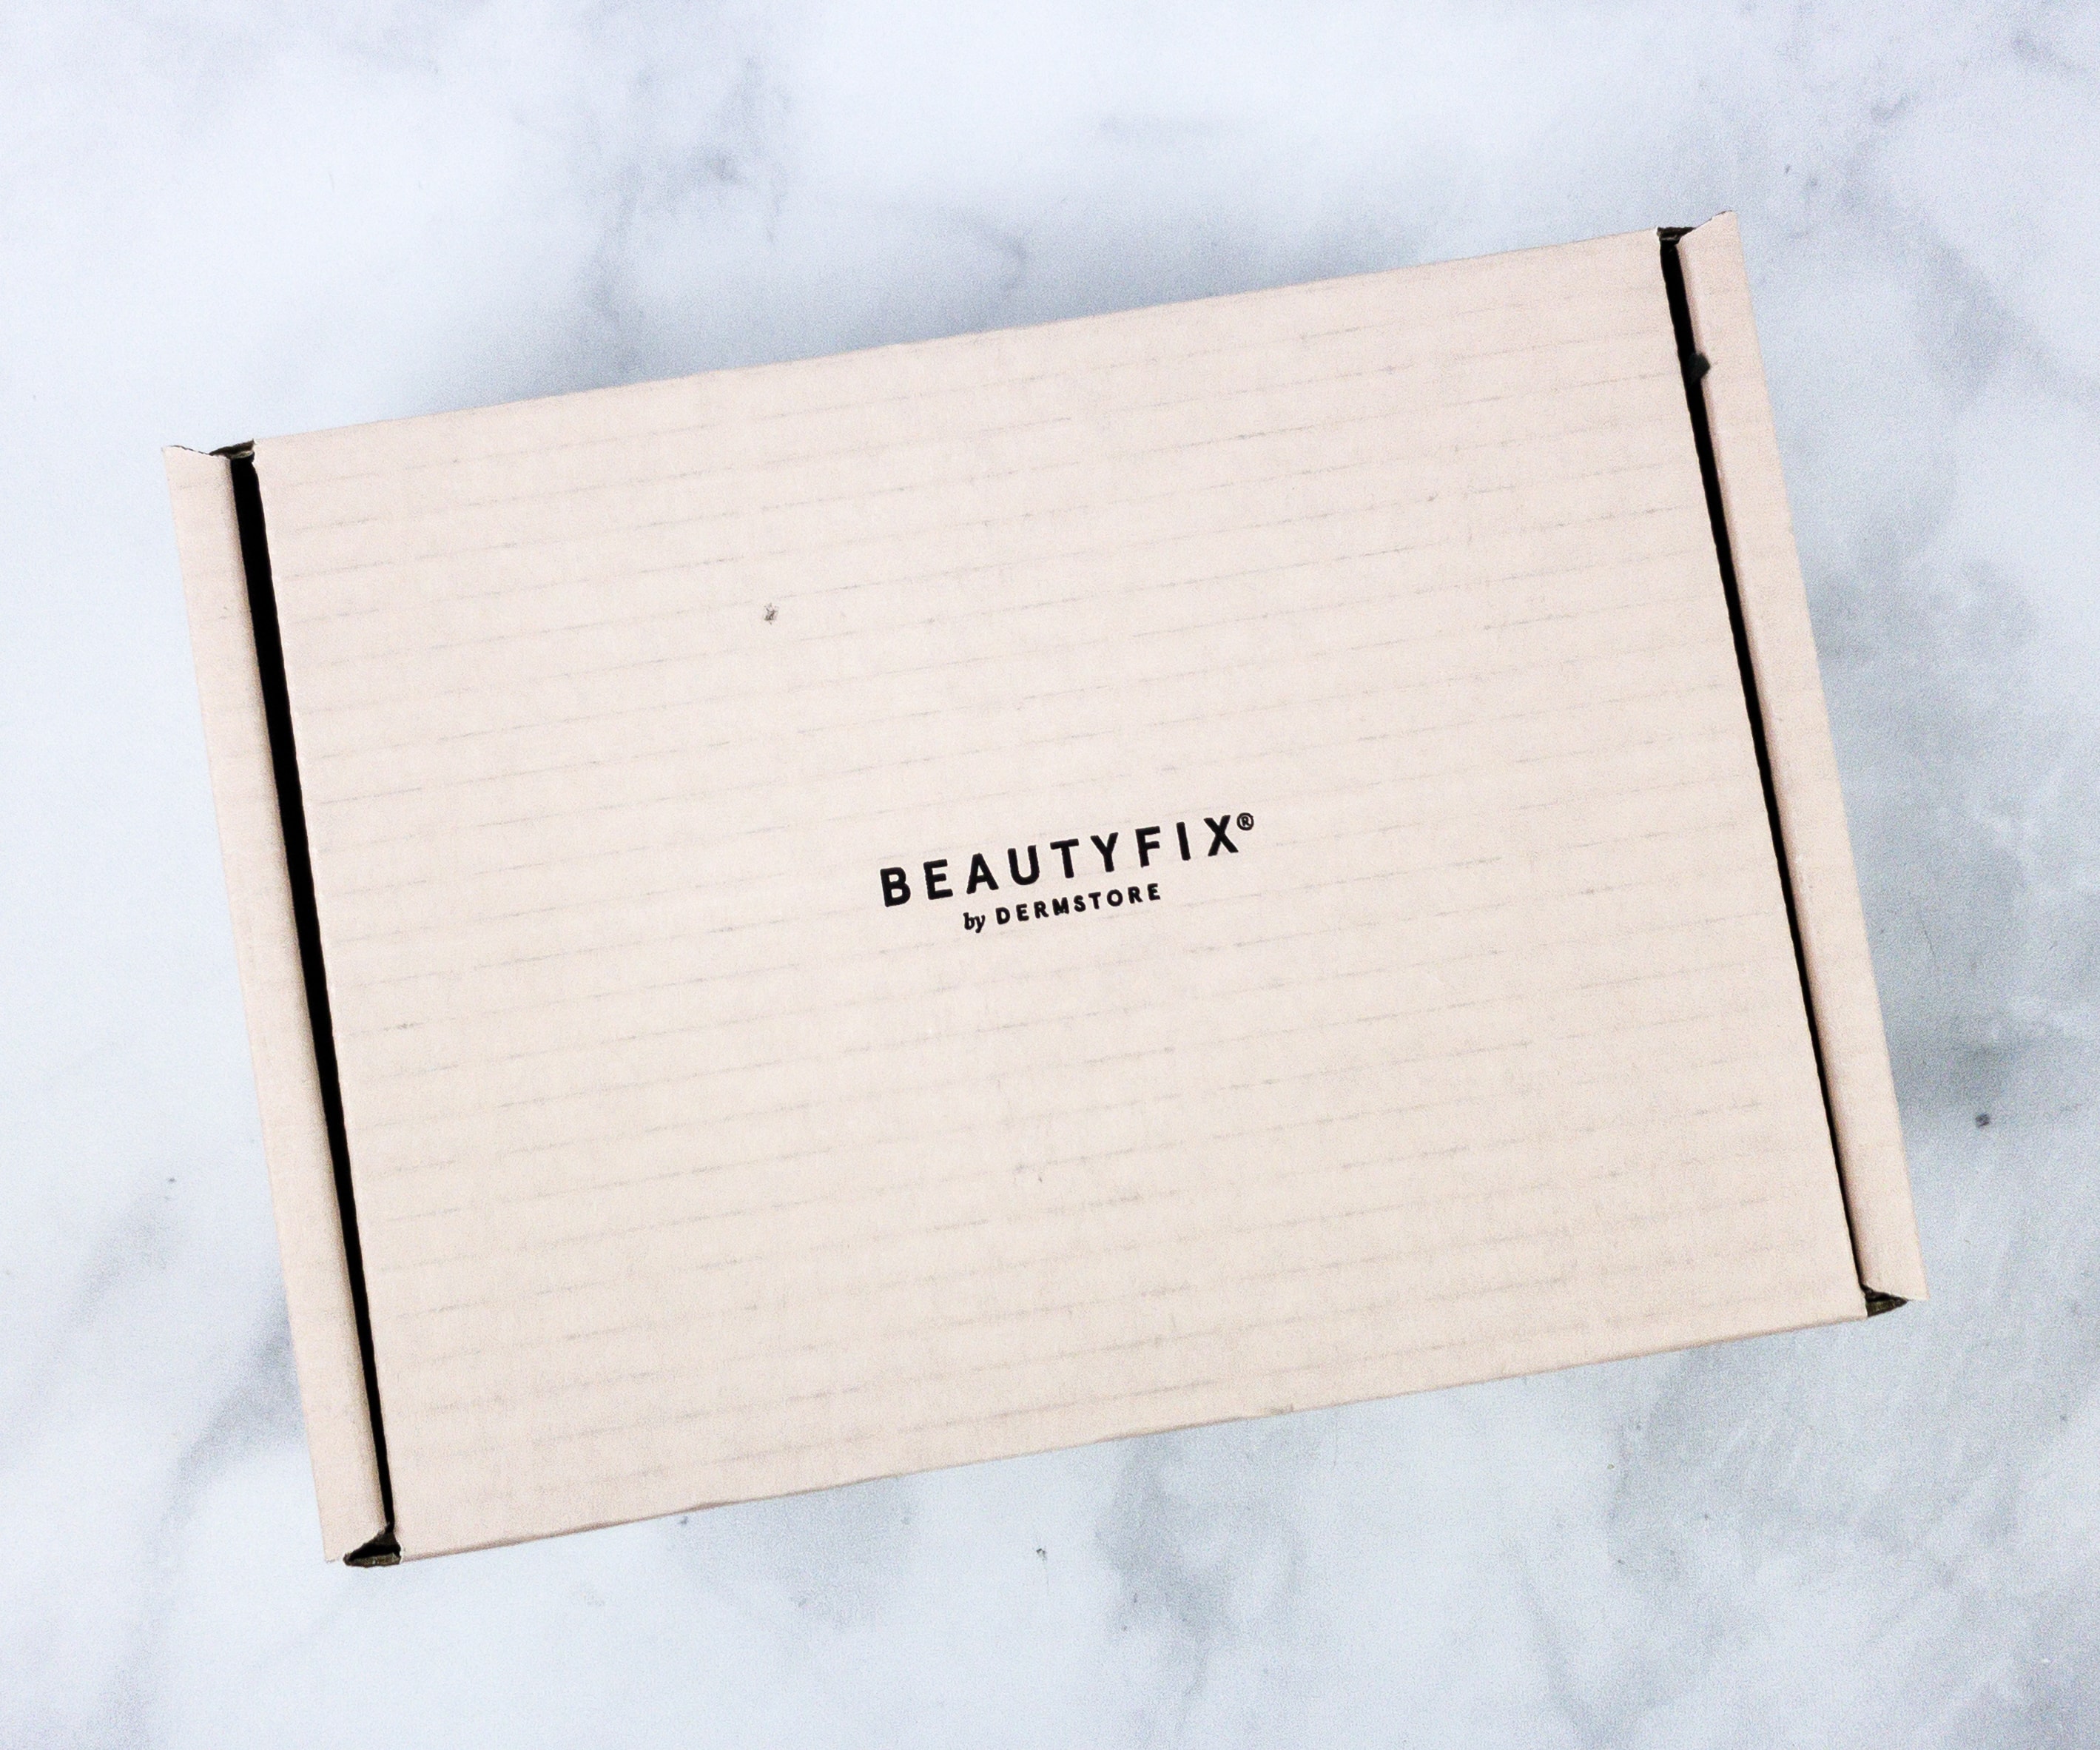 BeautyFIX January 2020 Subscription Box Review Hello Subscription